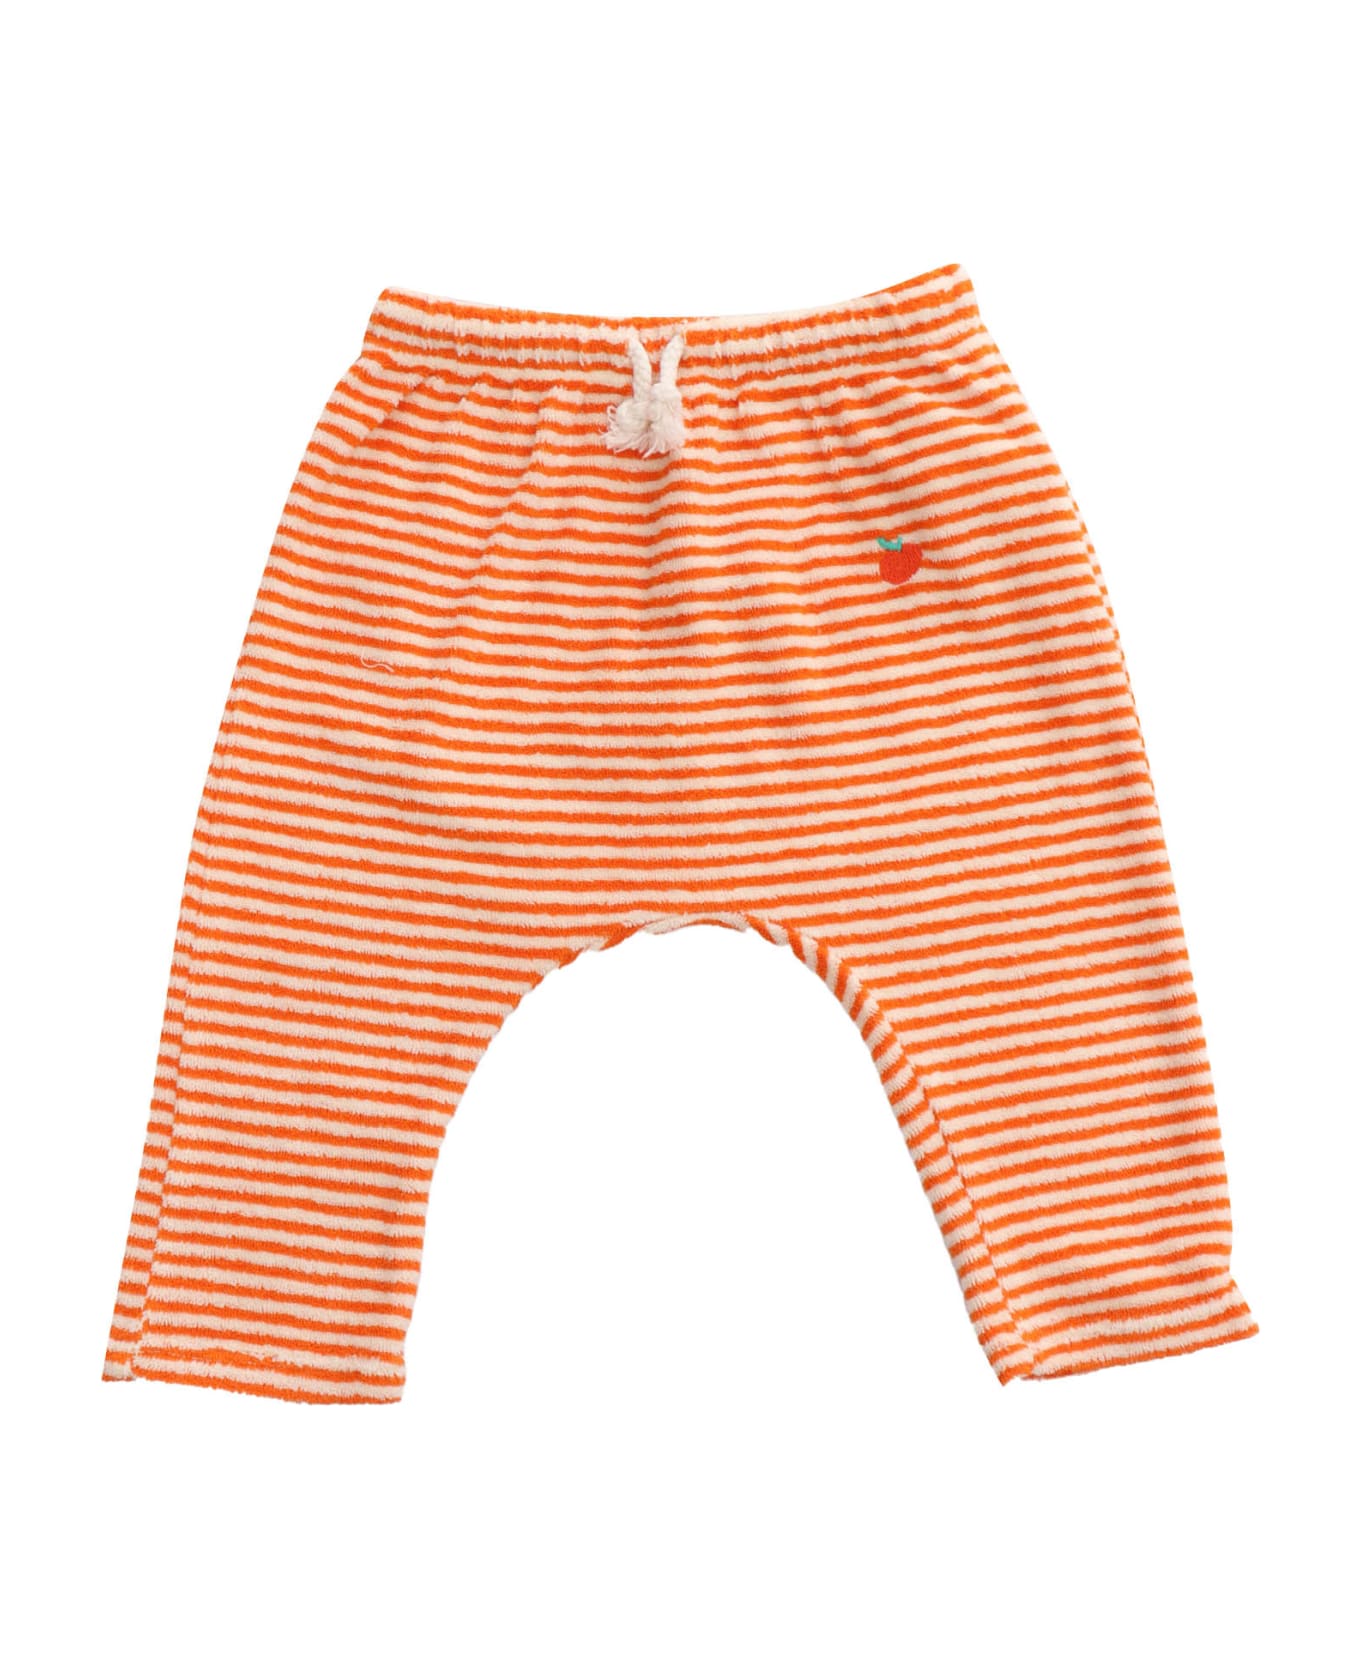 Bobo Choses Pantaloni Arancioni Da Neonato - ORANGE